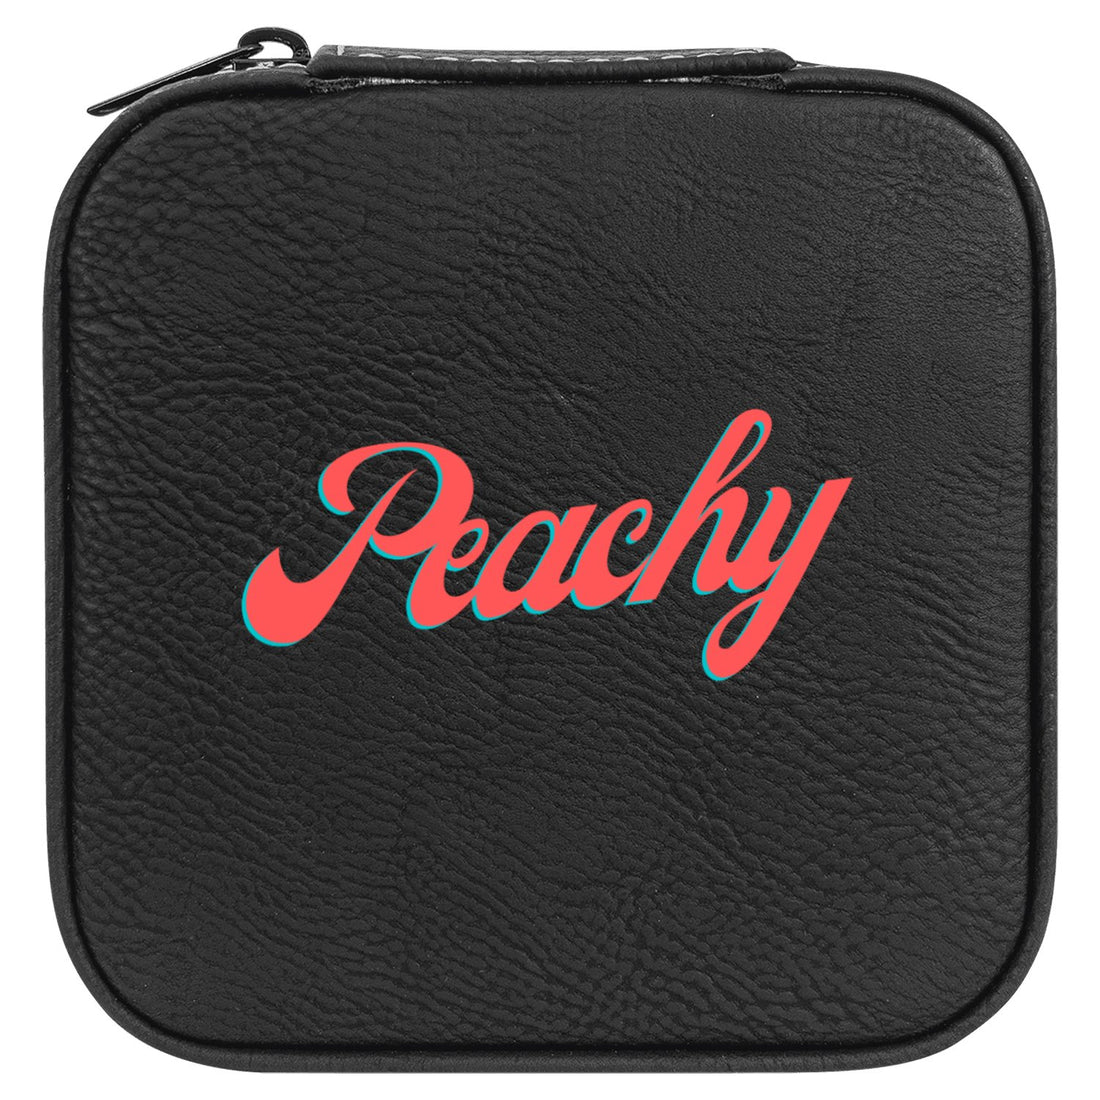 Peachy Jewelry Organizer - Positively Sassy - Peachy Jewelry Organizer